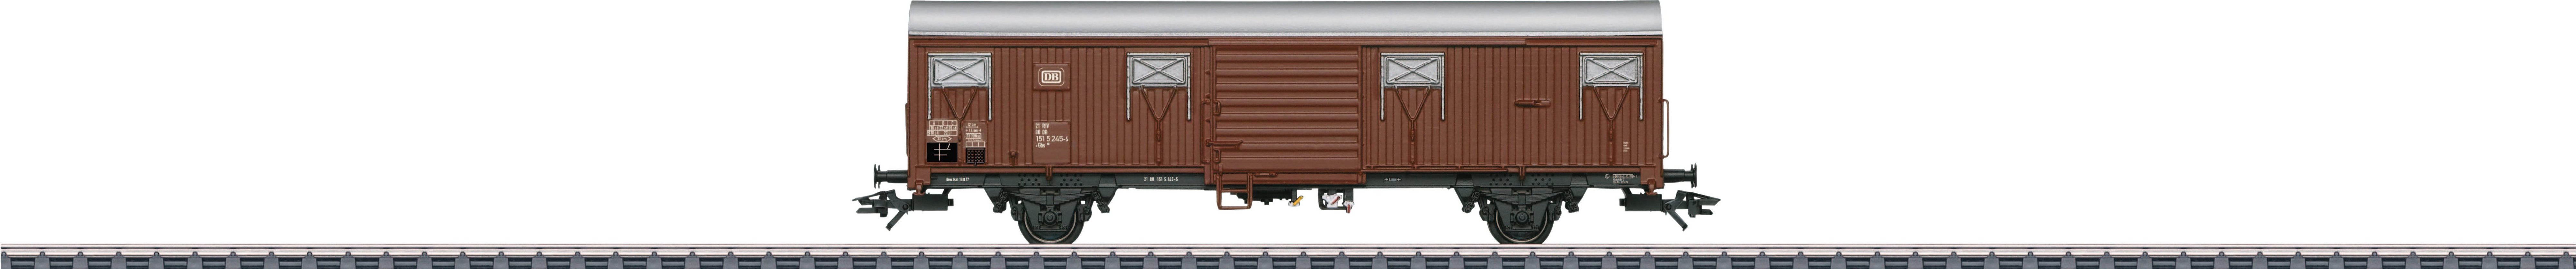 Märklin Güterwagen Spundwandwagen Gbs 256 - 47311, Spur H0, Made in Europe